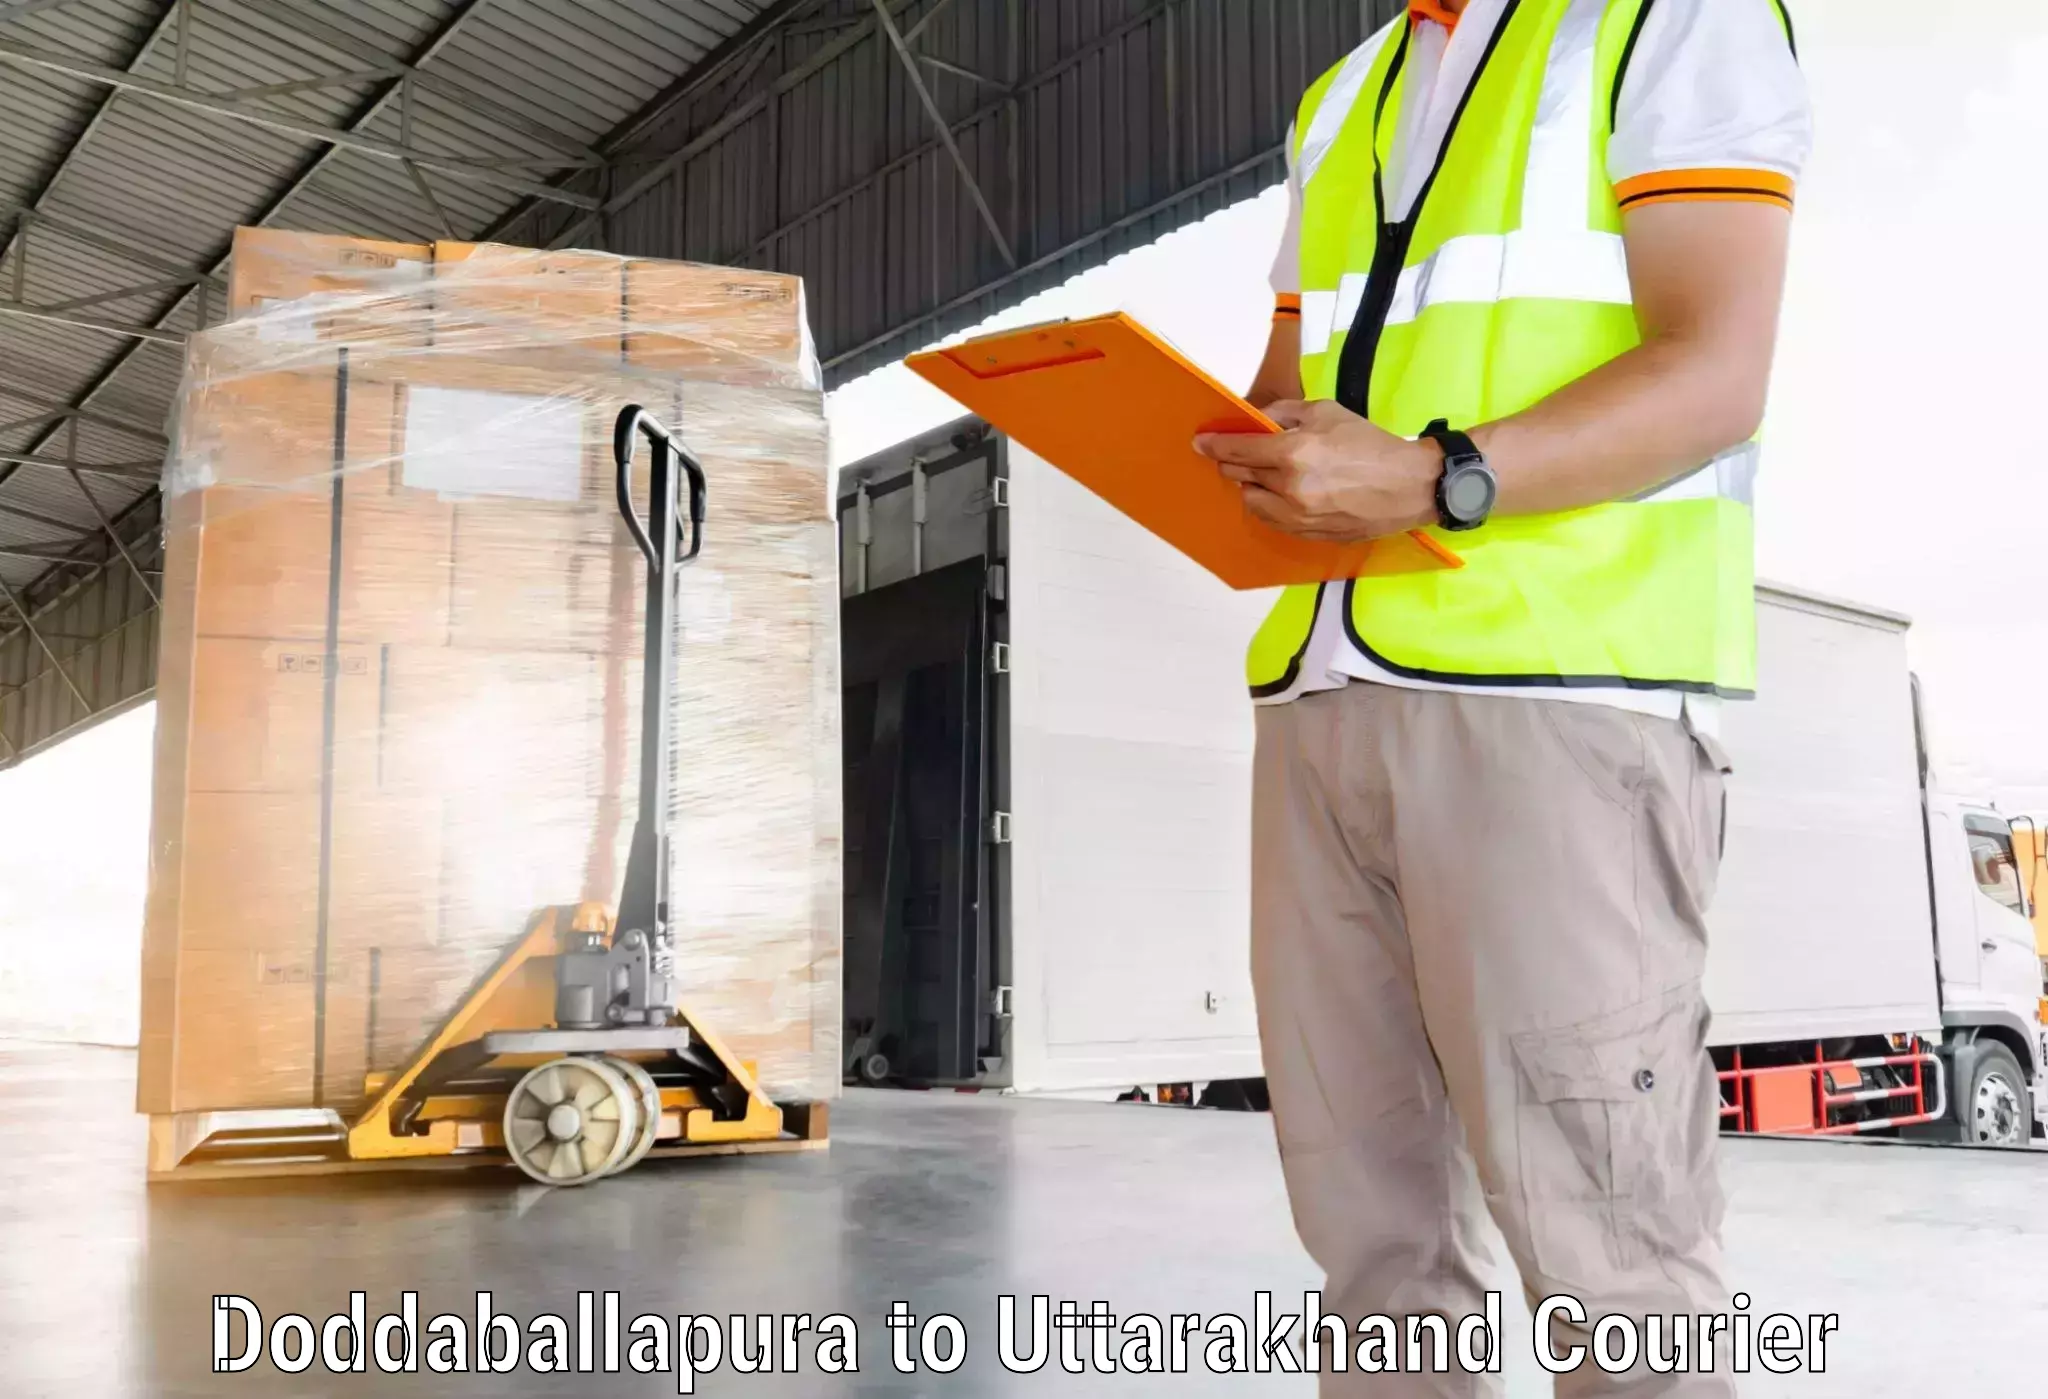 Courier service innovation Doddaballapura to Rudraprayag